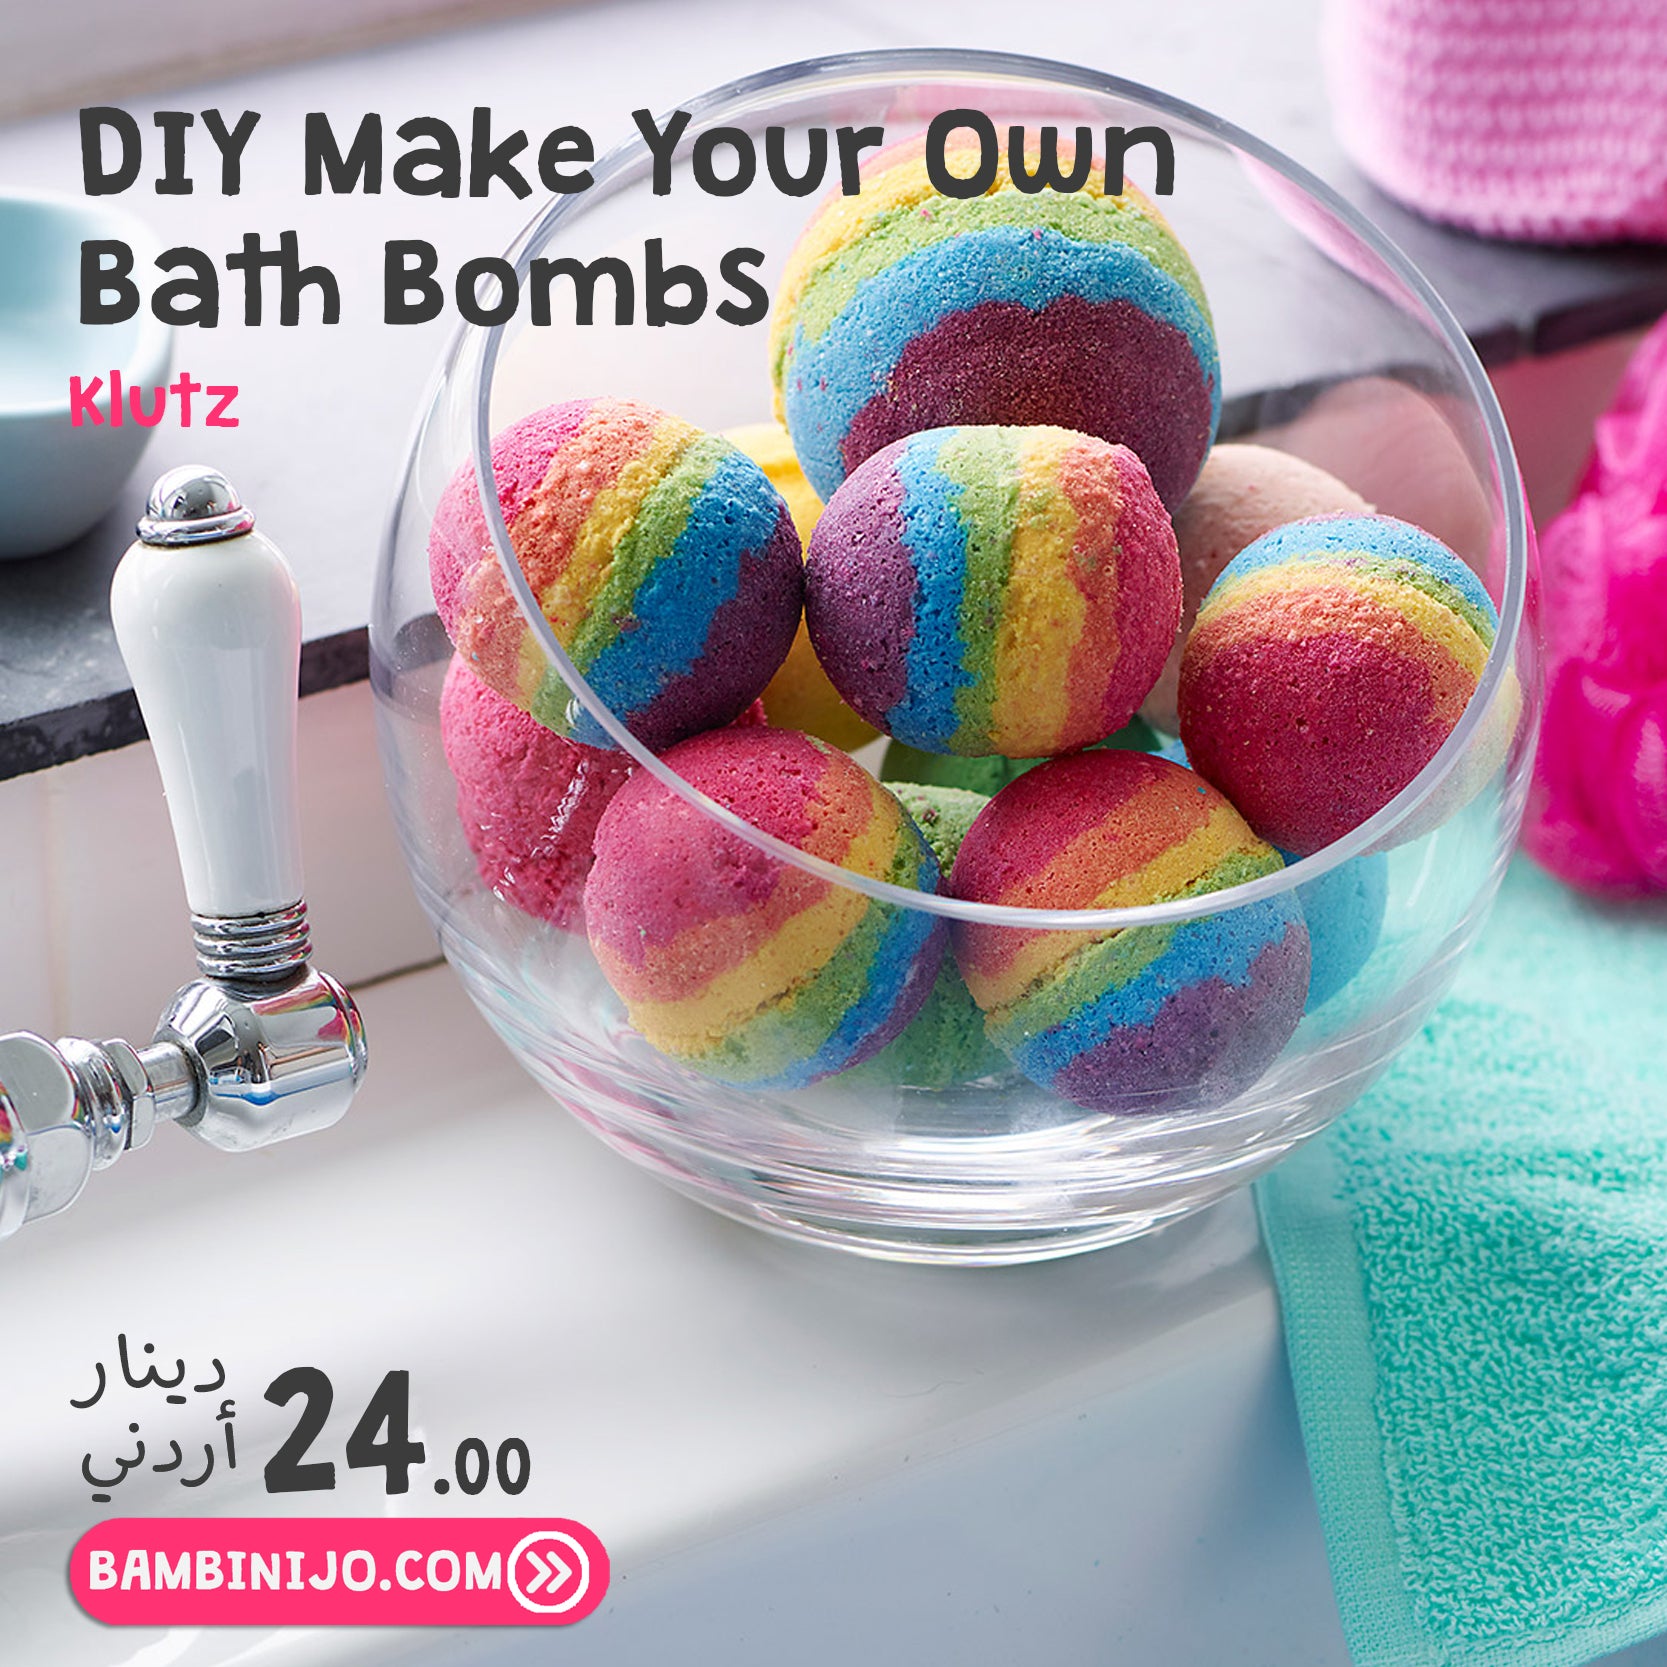 Klutz DIY Make Your Own Bath Bombs - BambiniJO | Buy Online | Jordan